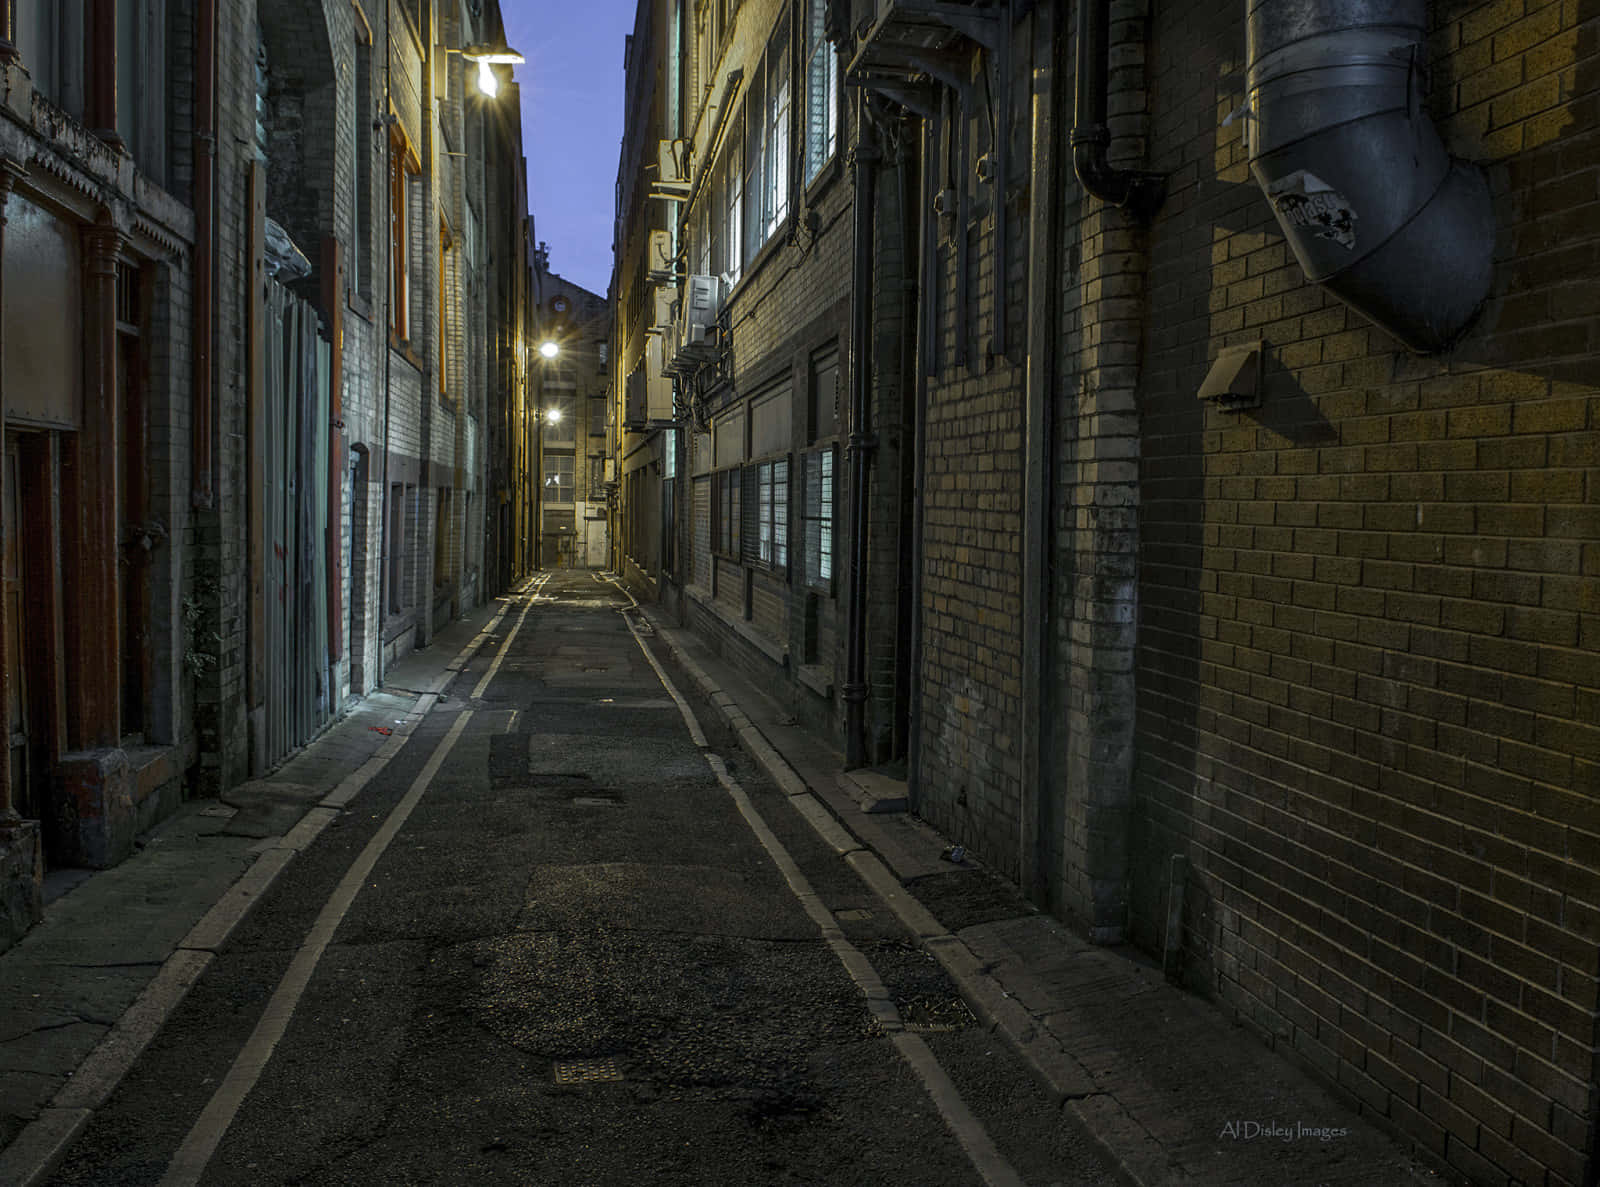 Exploring a hidden alleyway